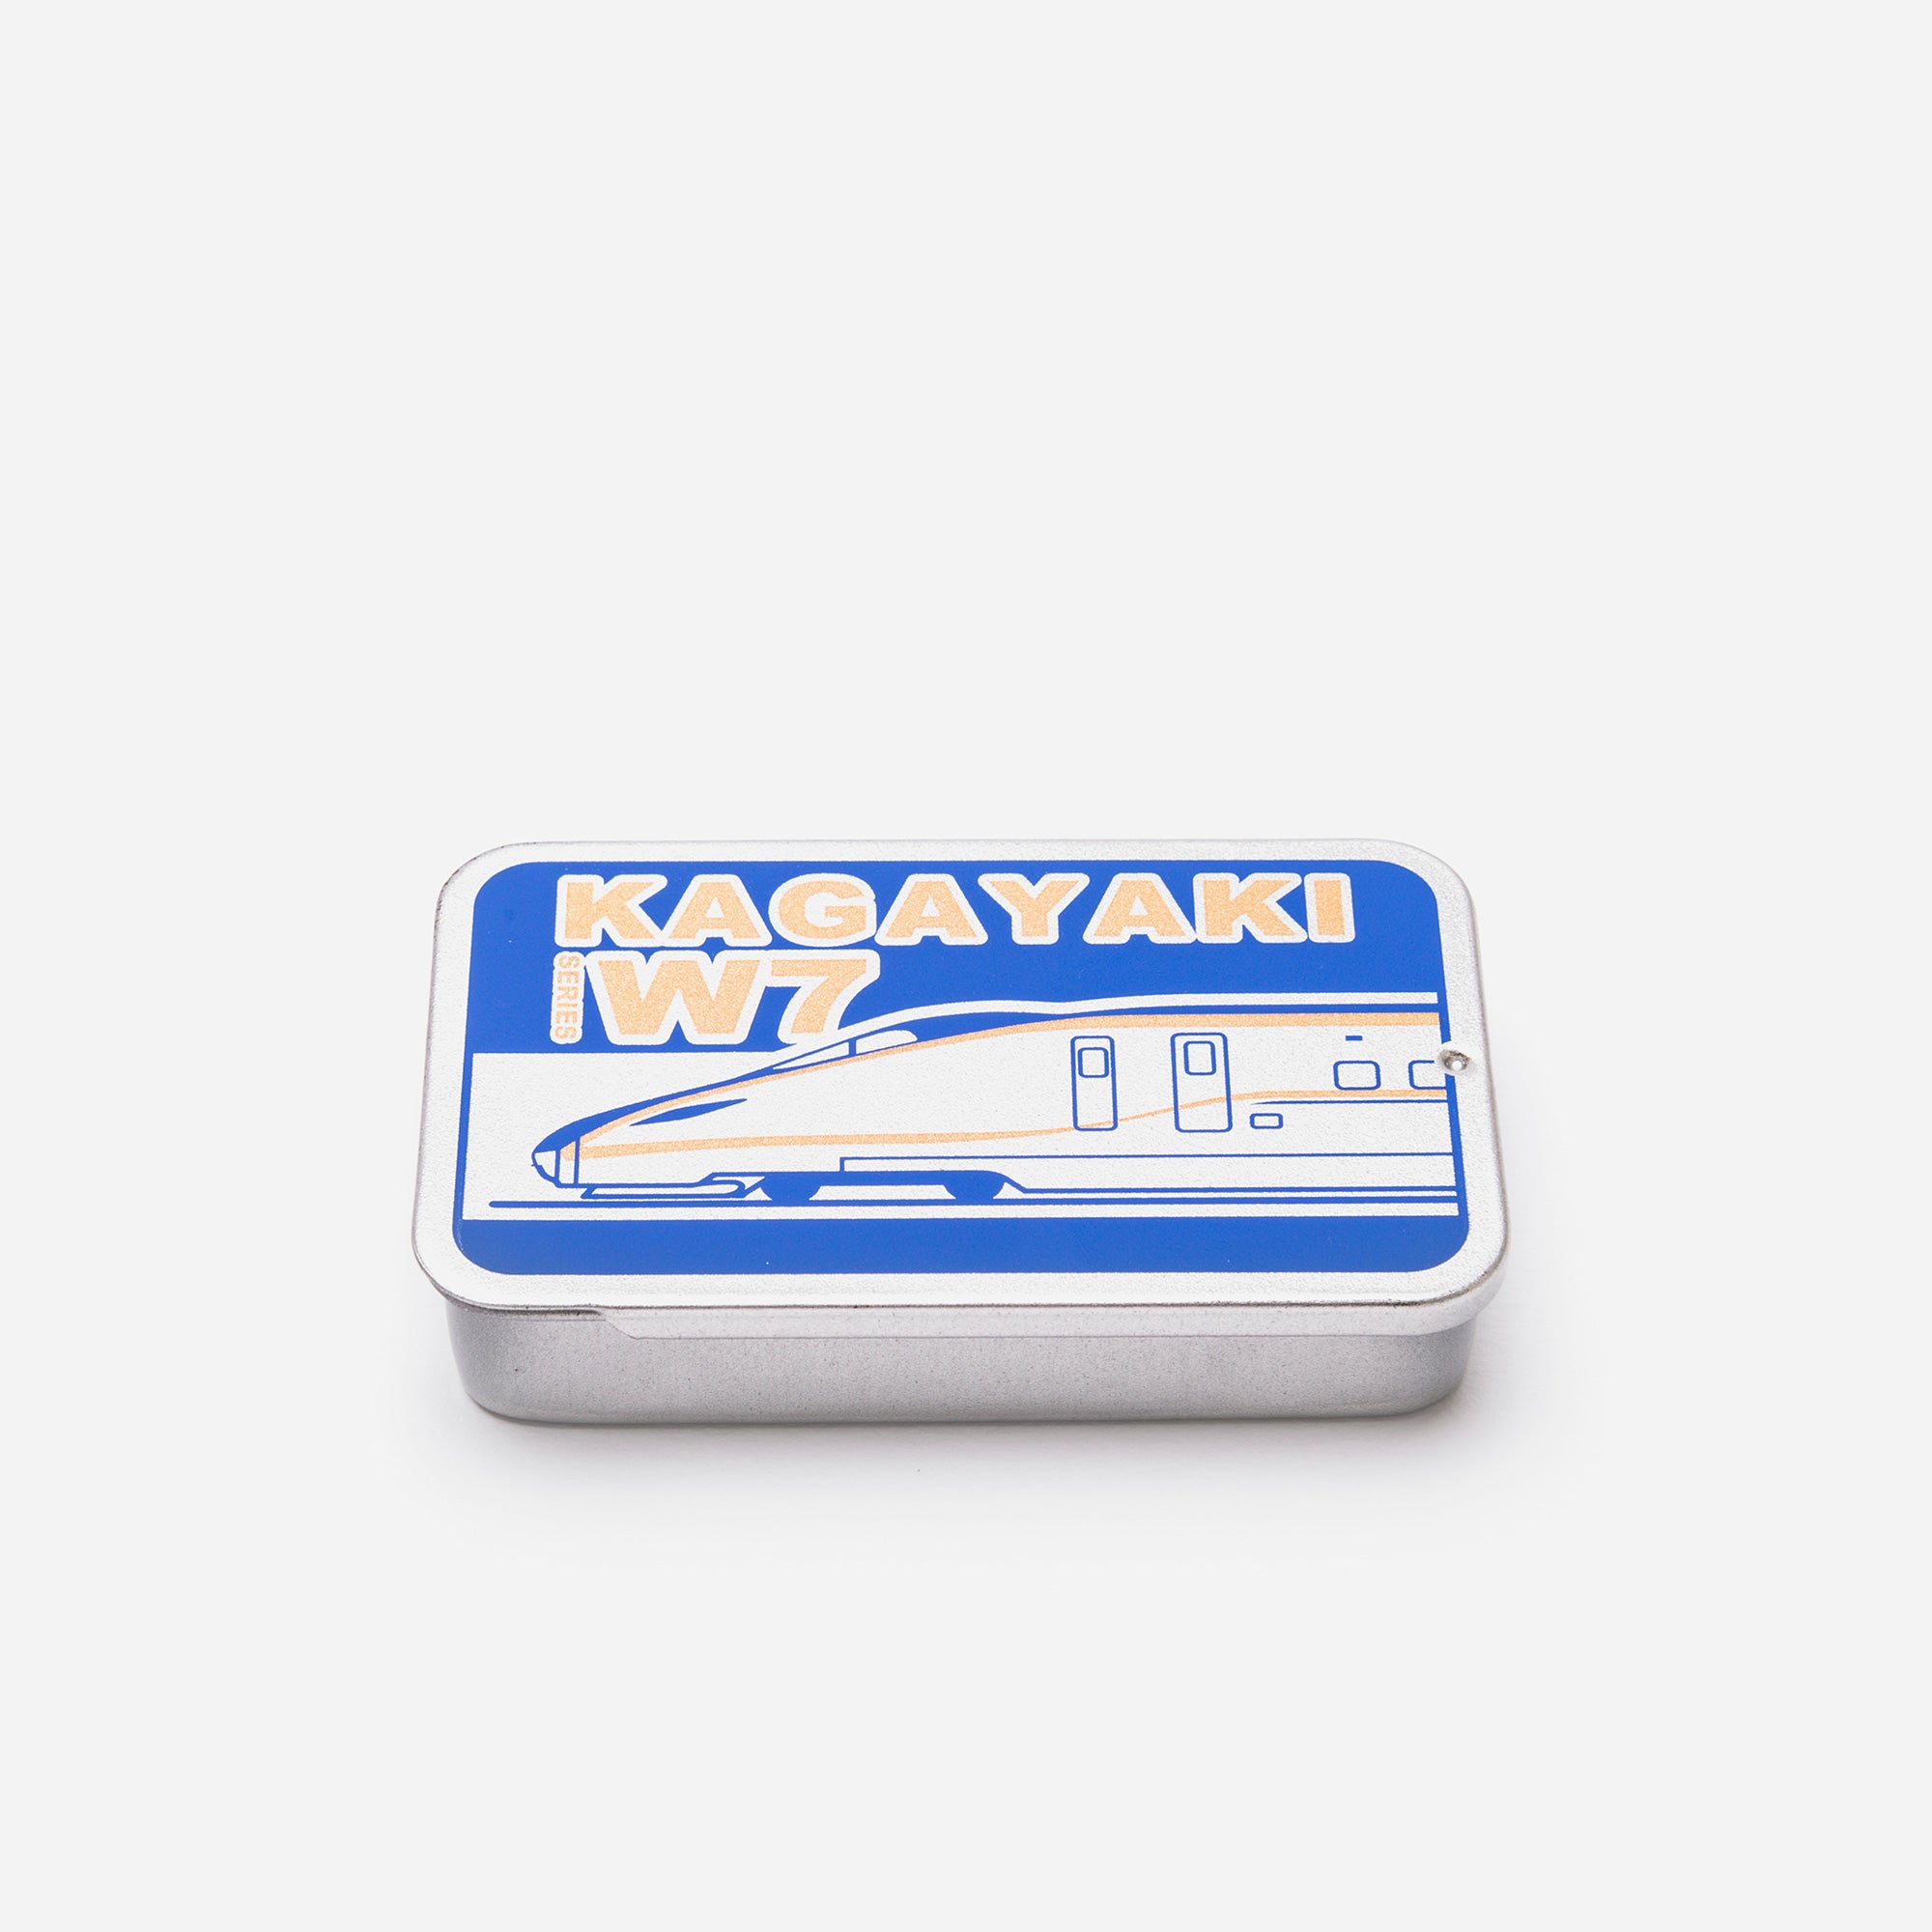 Kagayaki W7 Paper clip